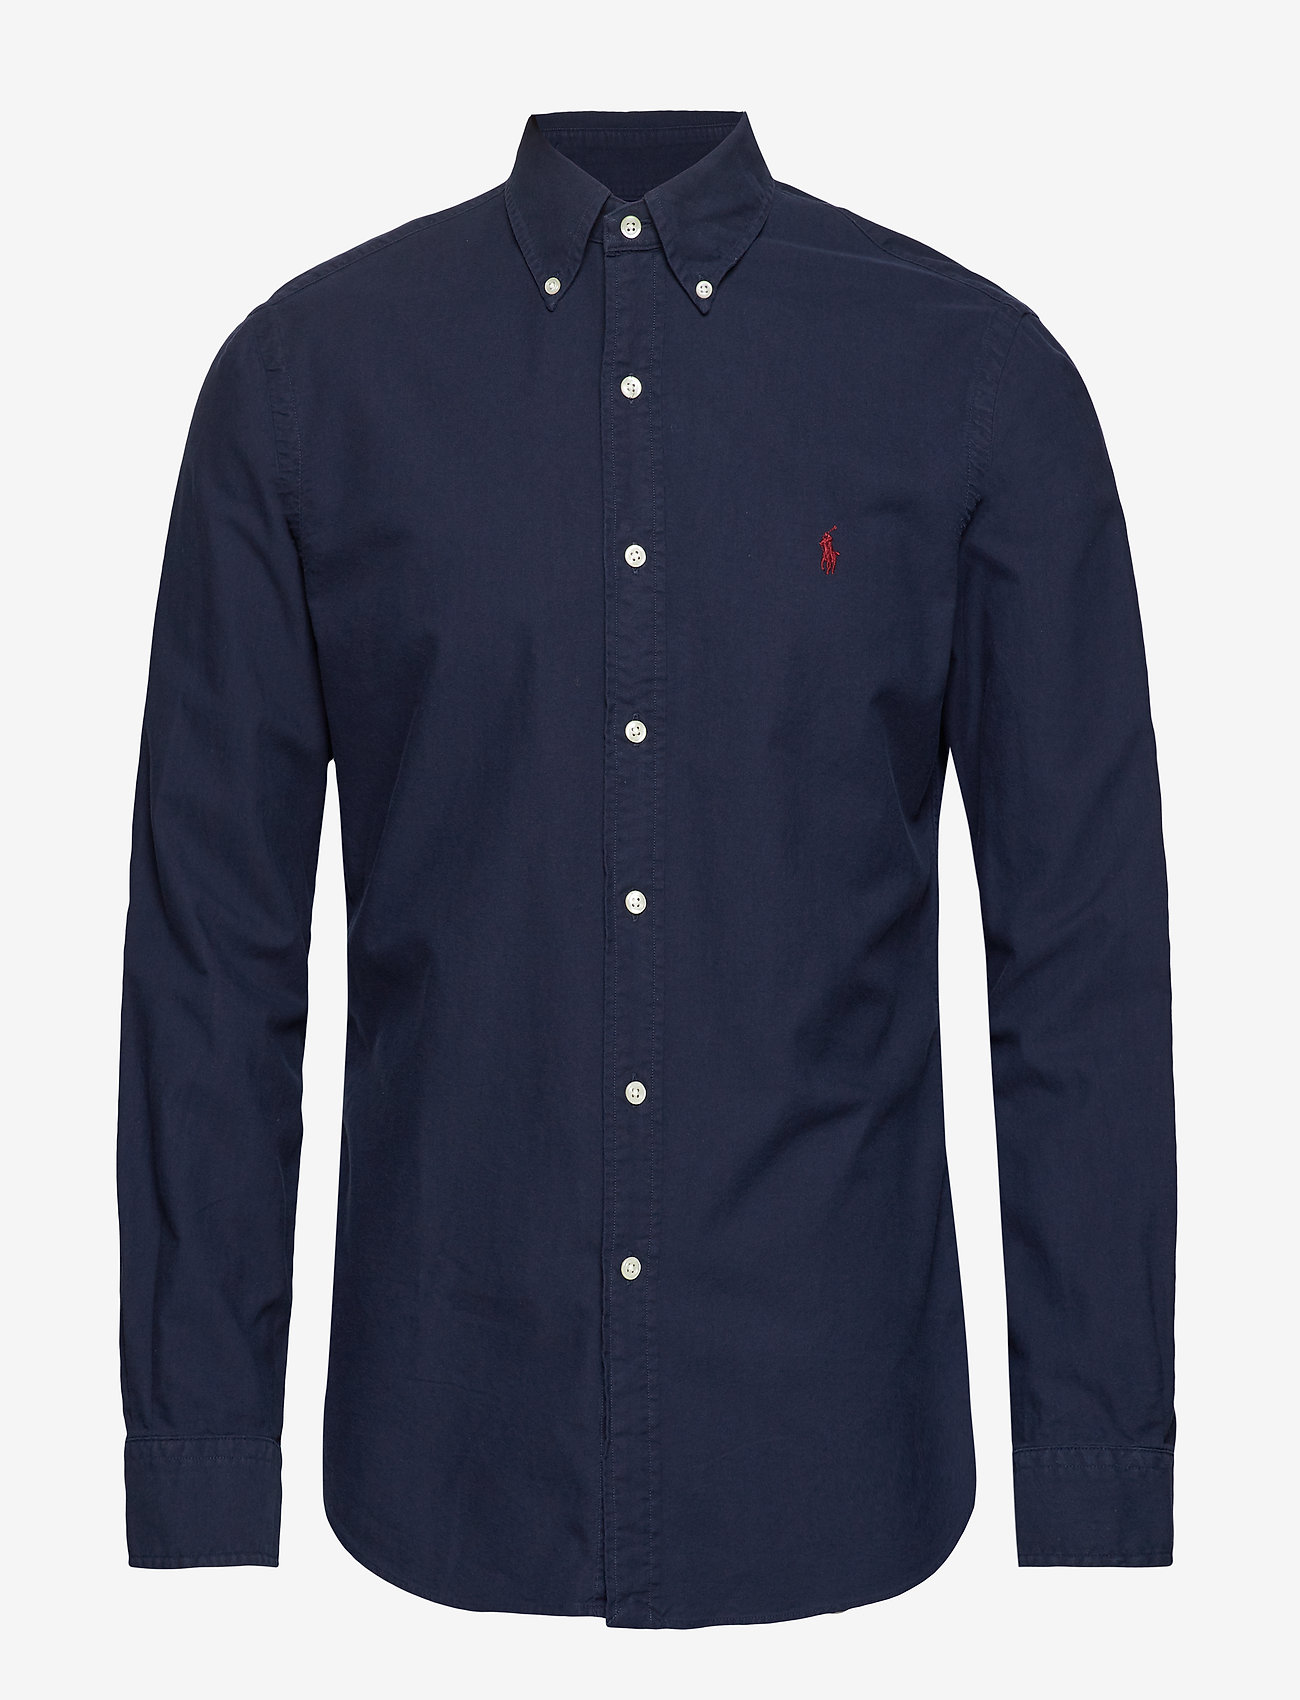 Polo Ralph Lauren - Slim Fit Garment-Dyed Oxford Shirt - oxford shirts - rl navy - 1